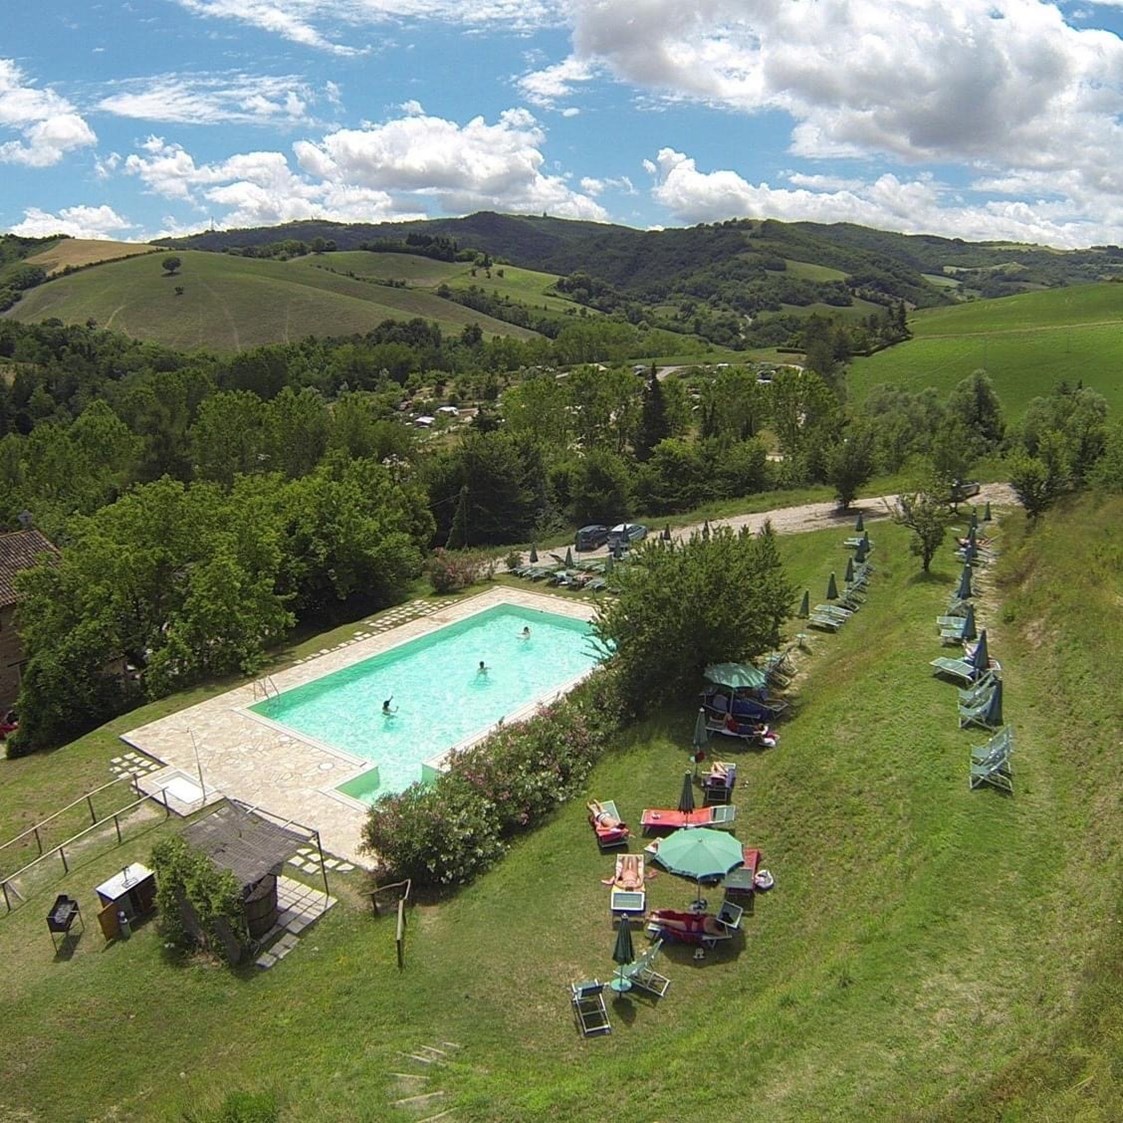 Glampingunterkunft: Schwimmbad / Pool auf Camping Podere sei Poorte - Tendi safarizelt mit Badezimmer auf Camping Podere sei Poorte